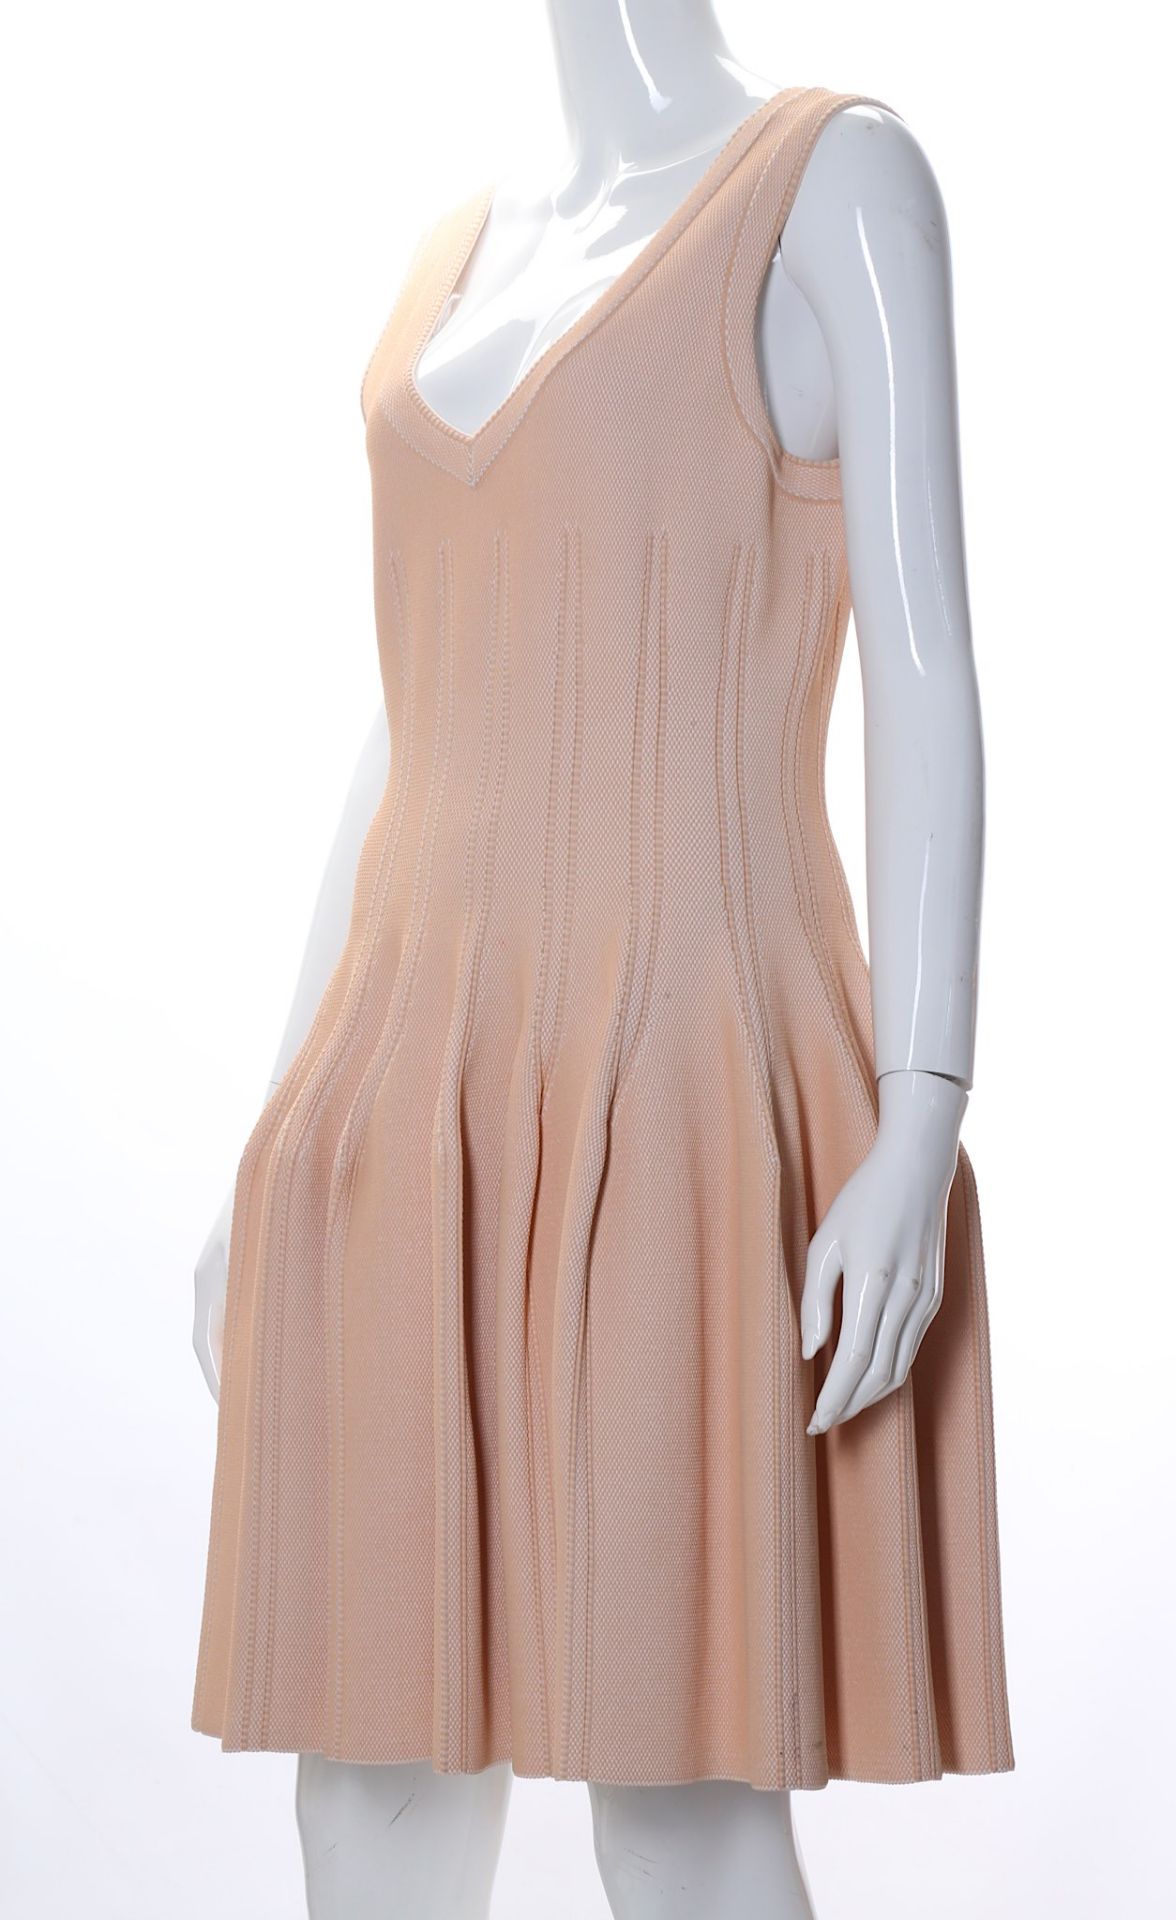 Alaia Nude Pleated Flared Dress, sleeveless design - Image 2 of 4